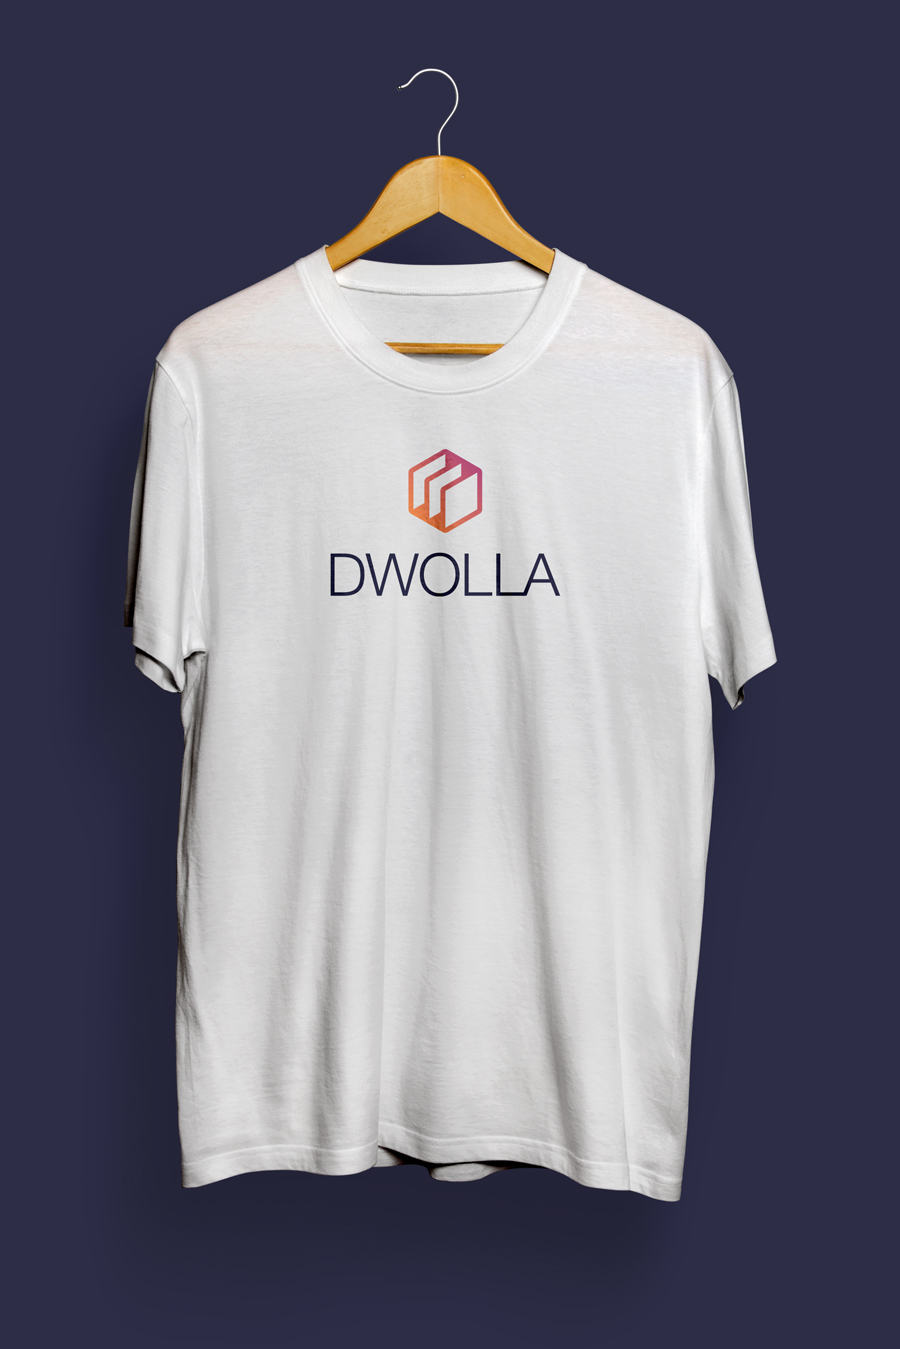 dwolla-logo-t-shirt-mockup-01